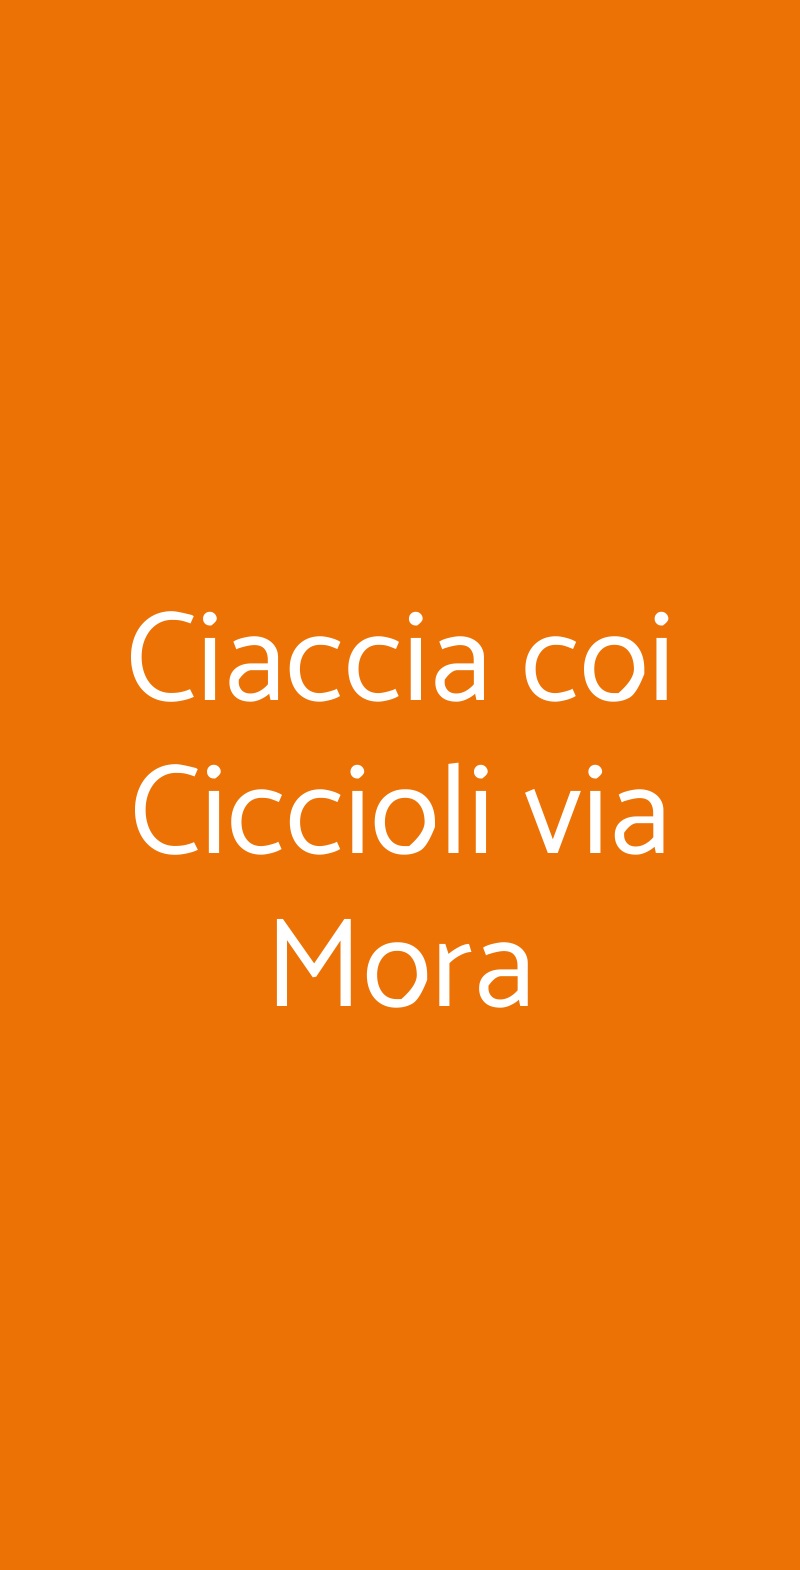 Ciaccia coi Ciccioli via Mora Milano menù 1 pagina